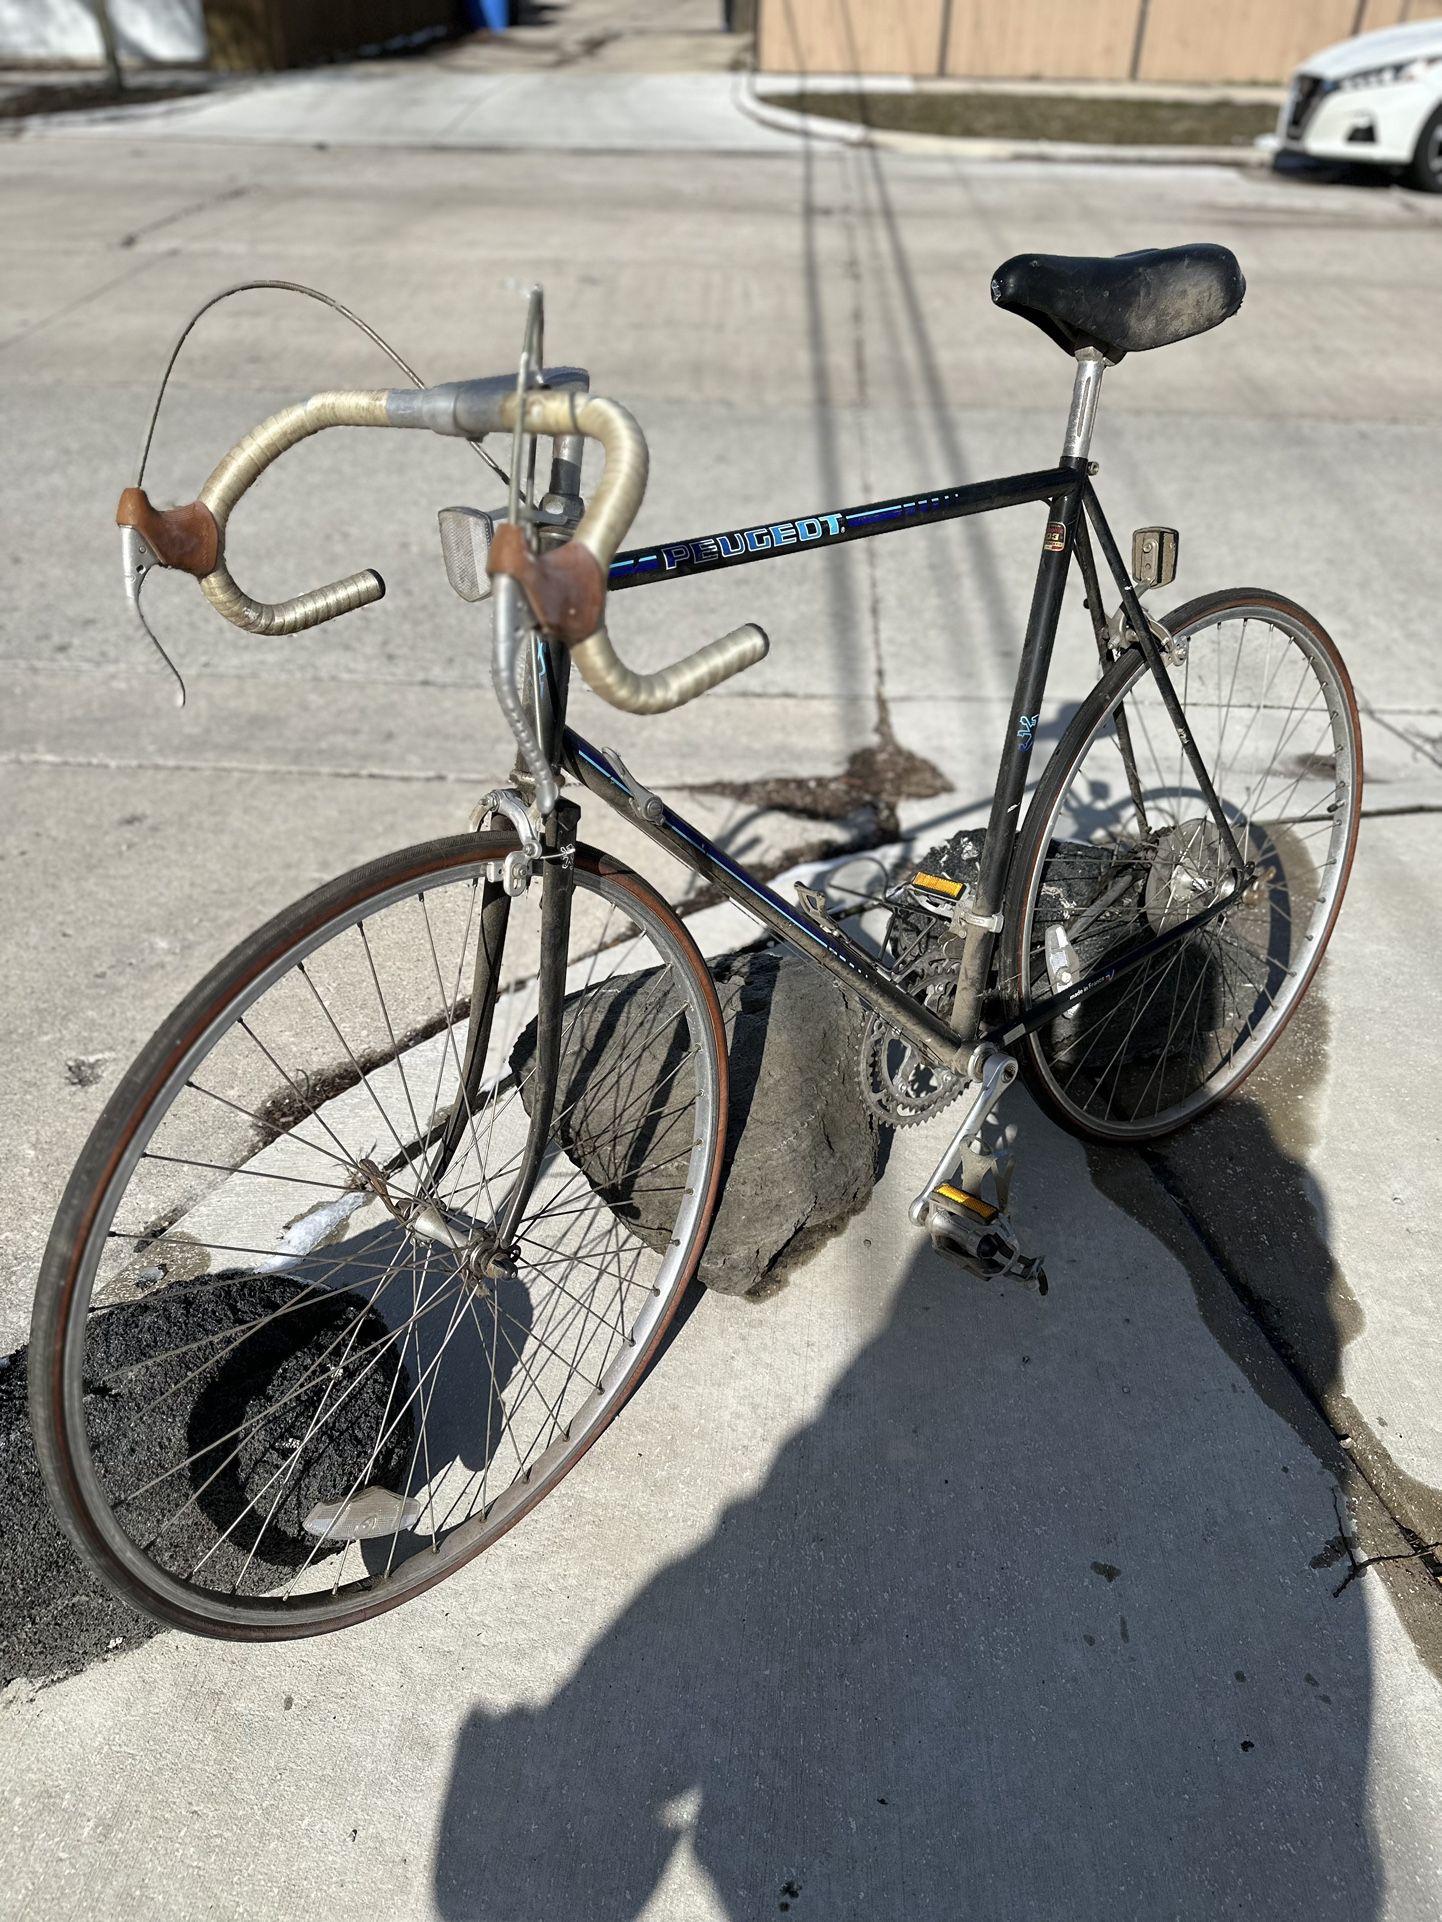 Vintage Peugeot Road Bike,, $100